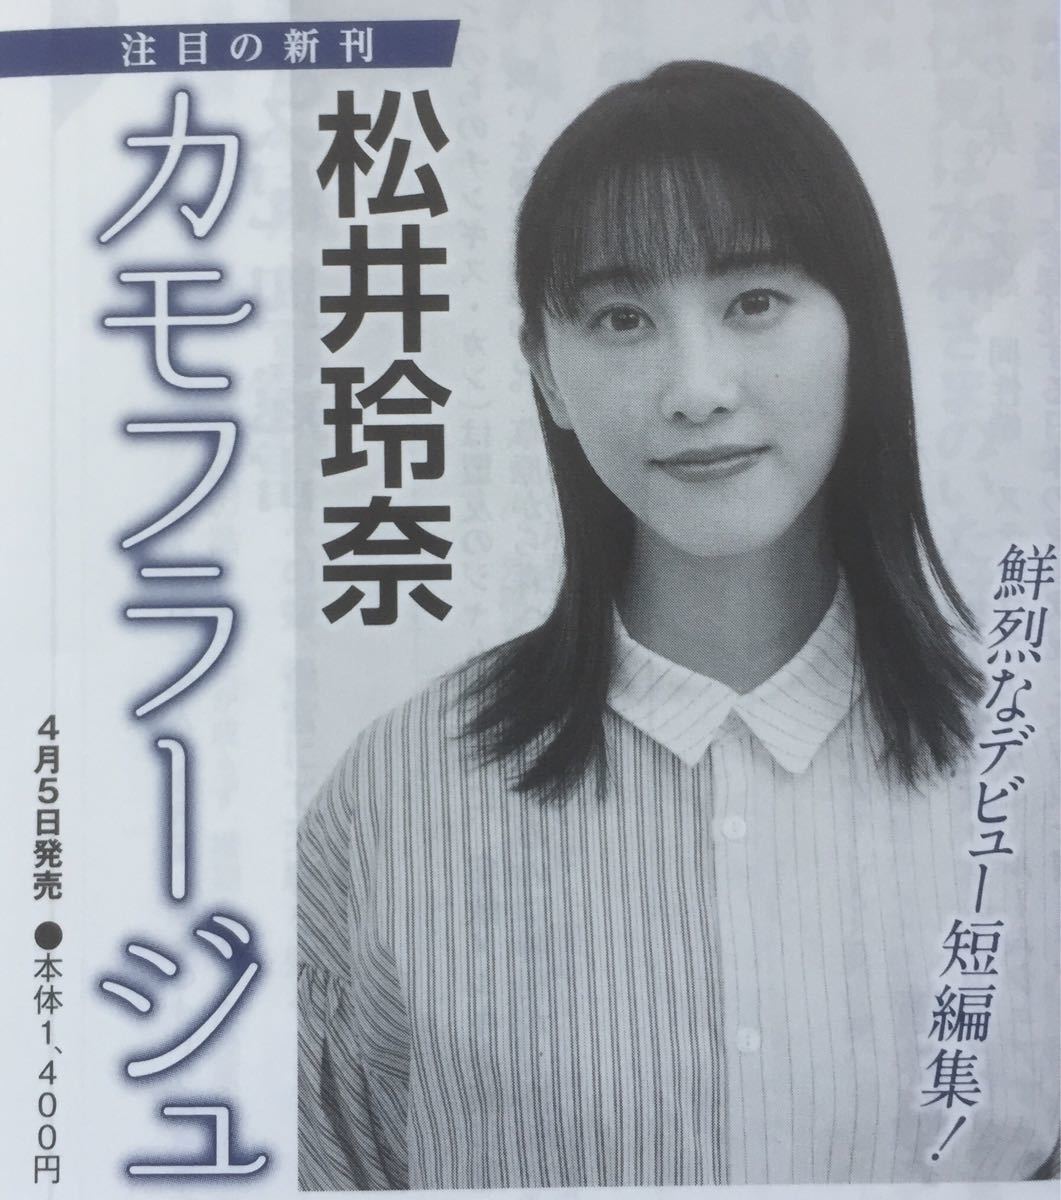 AKB48 Matsui Rena for sales promotion leaflet not for sale [ camouflage -ju]